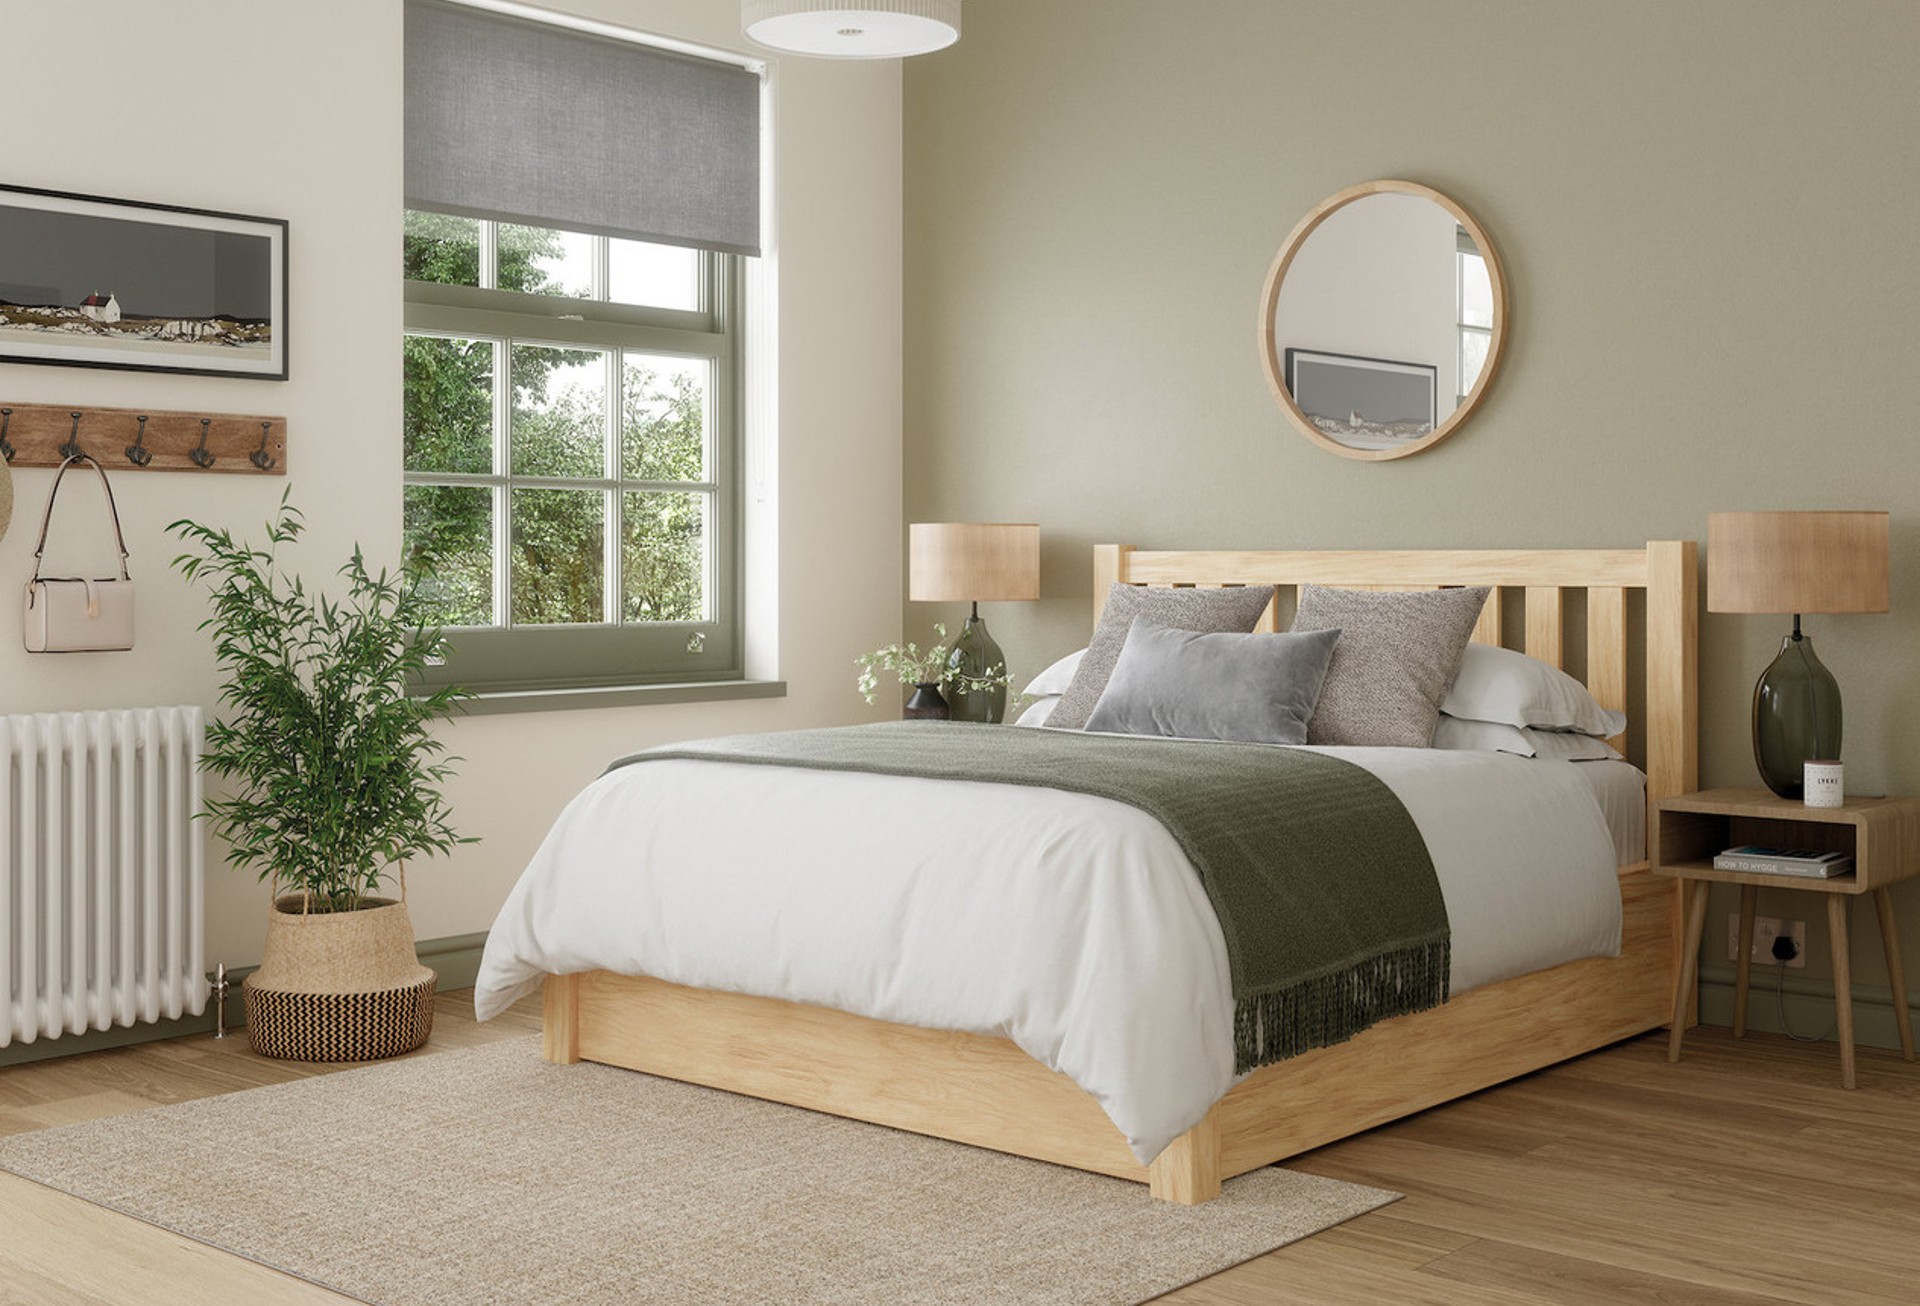 Edgemont light wooden bedframe to incorporate in maximalist bedroom design concepts